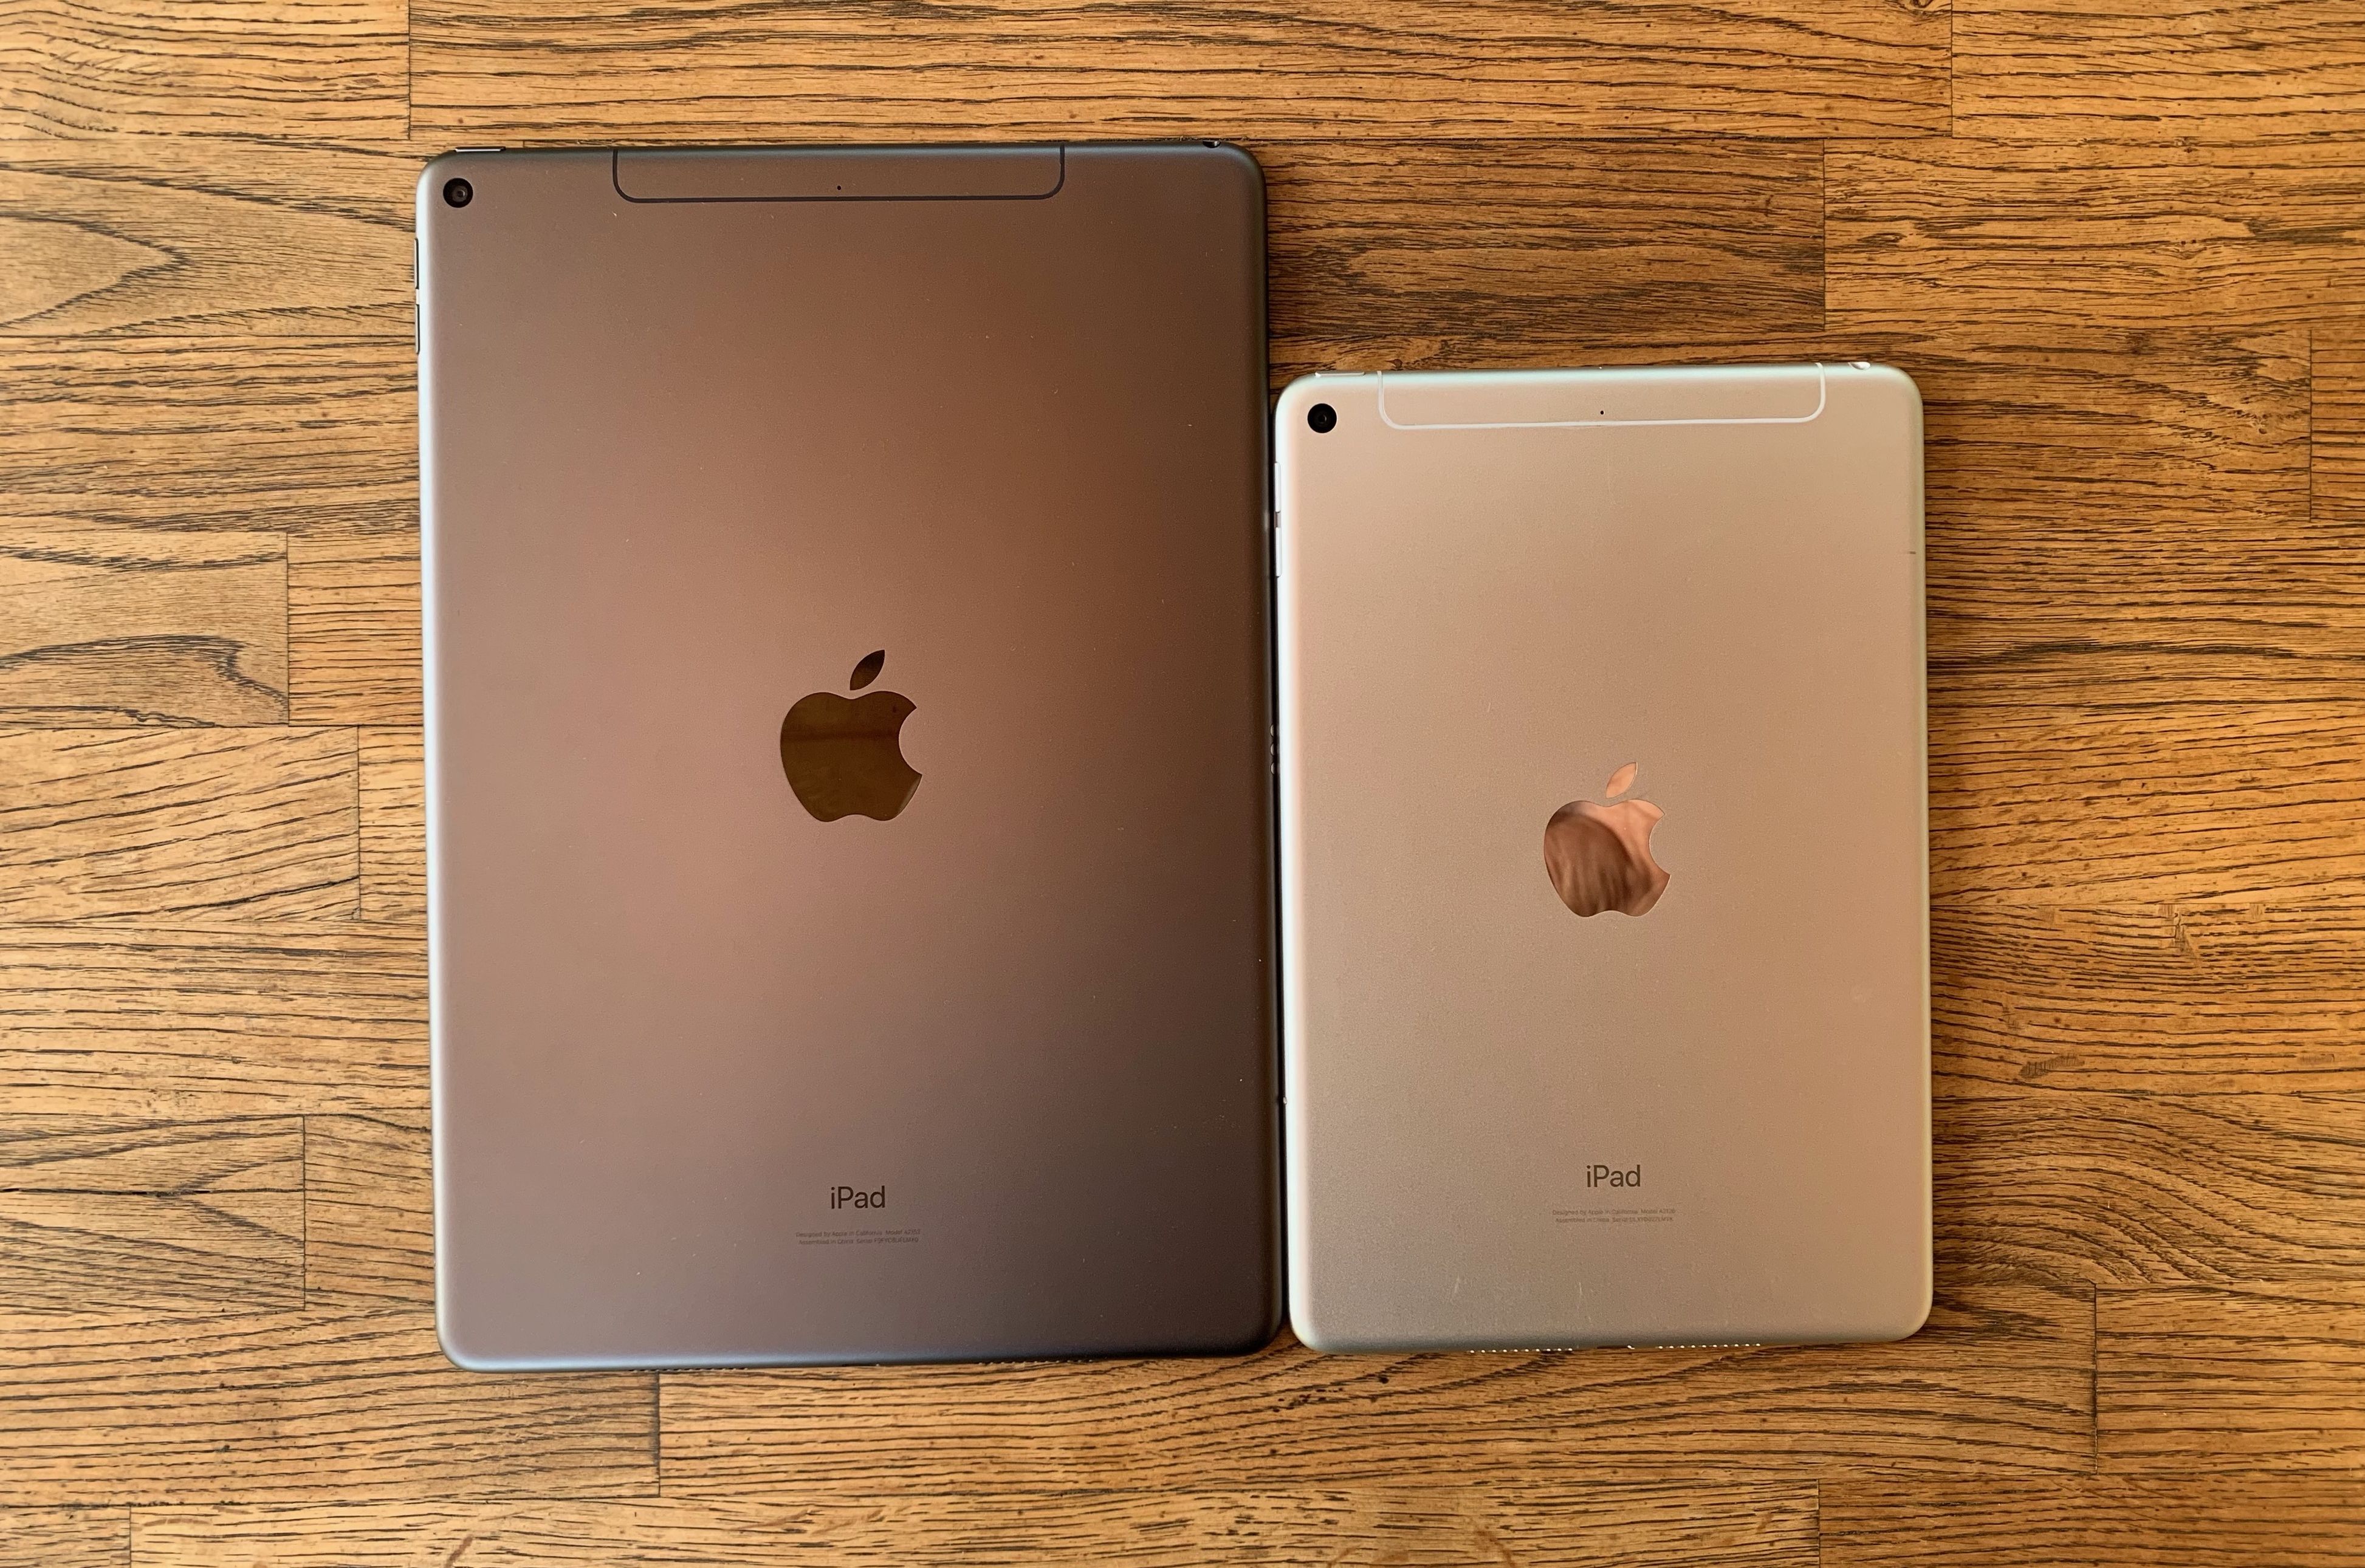 iPad Air and iPad mini 2019 review: Apple's tablets strike an ideal balance